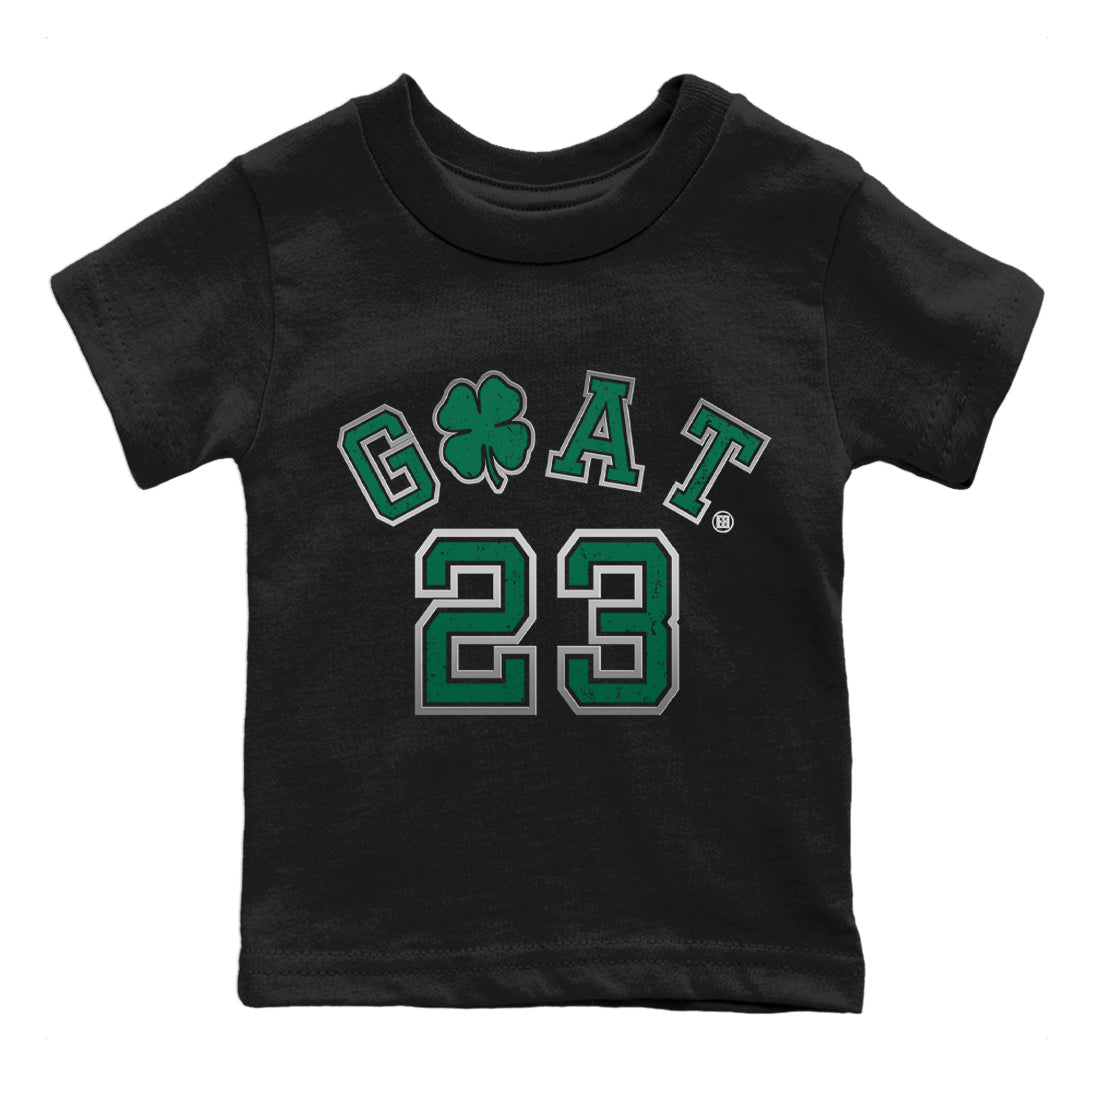 Jordan 1 Gorge Green Sneaker Match Tees Goat 23 Sneaker Tees Jordan 1 Gorge Green Sneaker Release Tees Kids Shirts